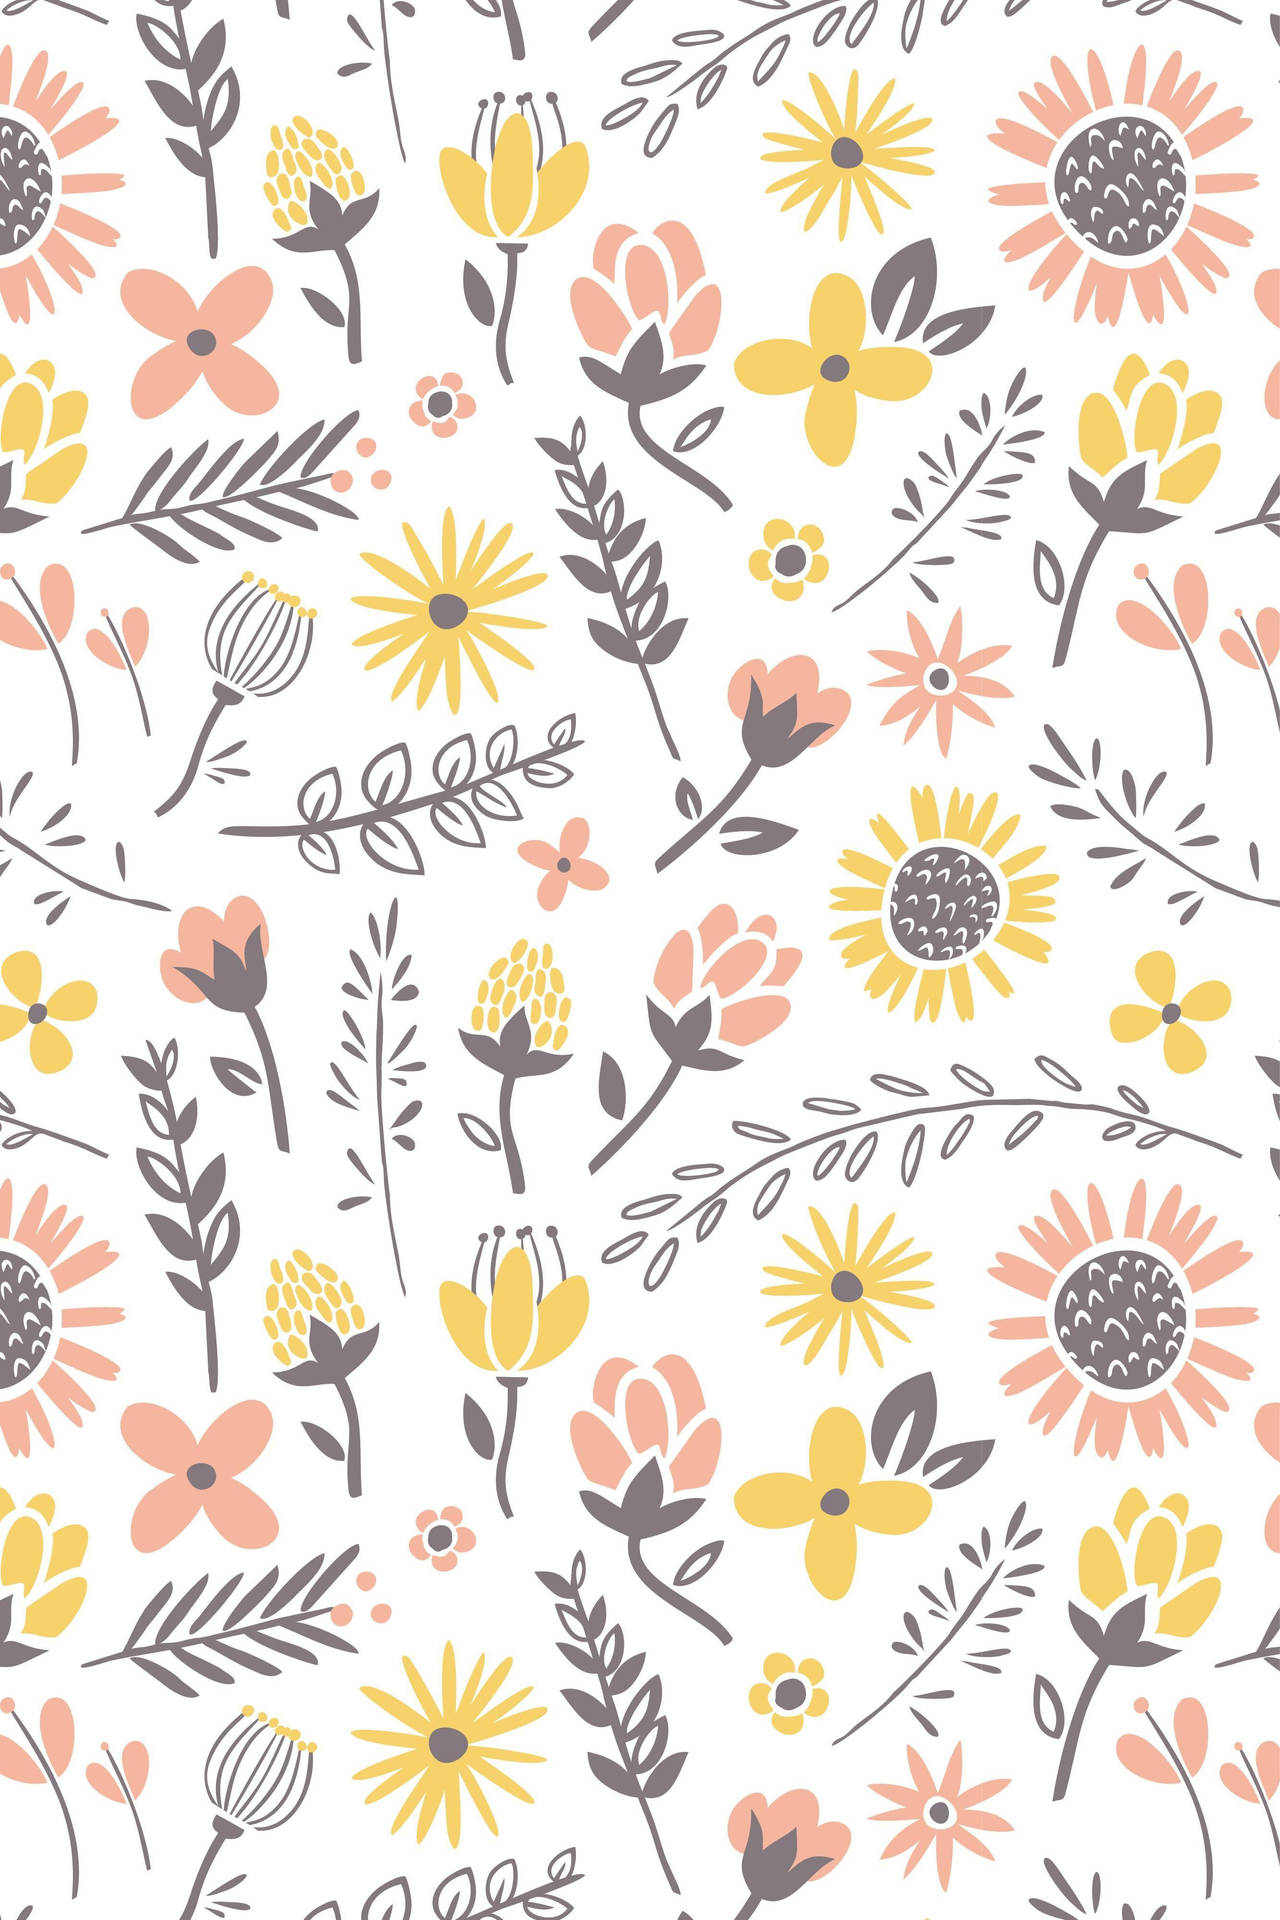 Tumblr Floral Patterns